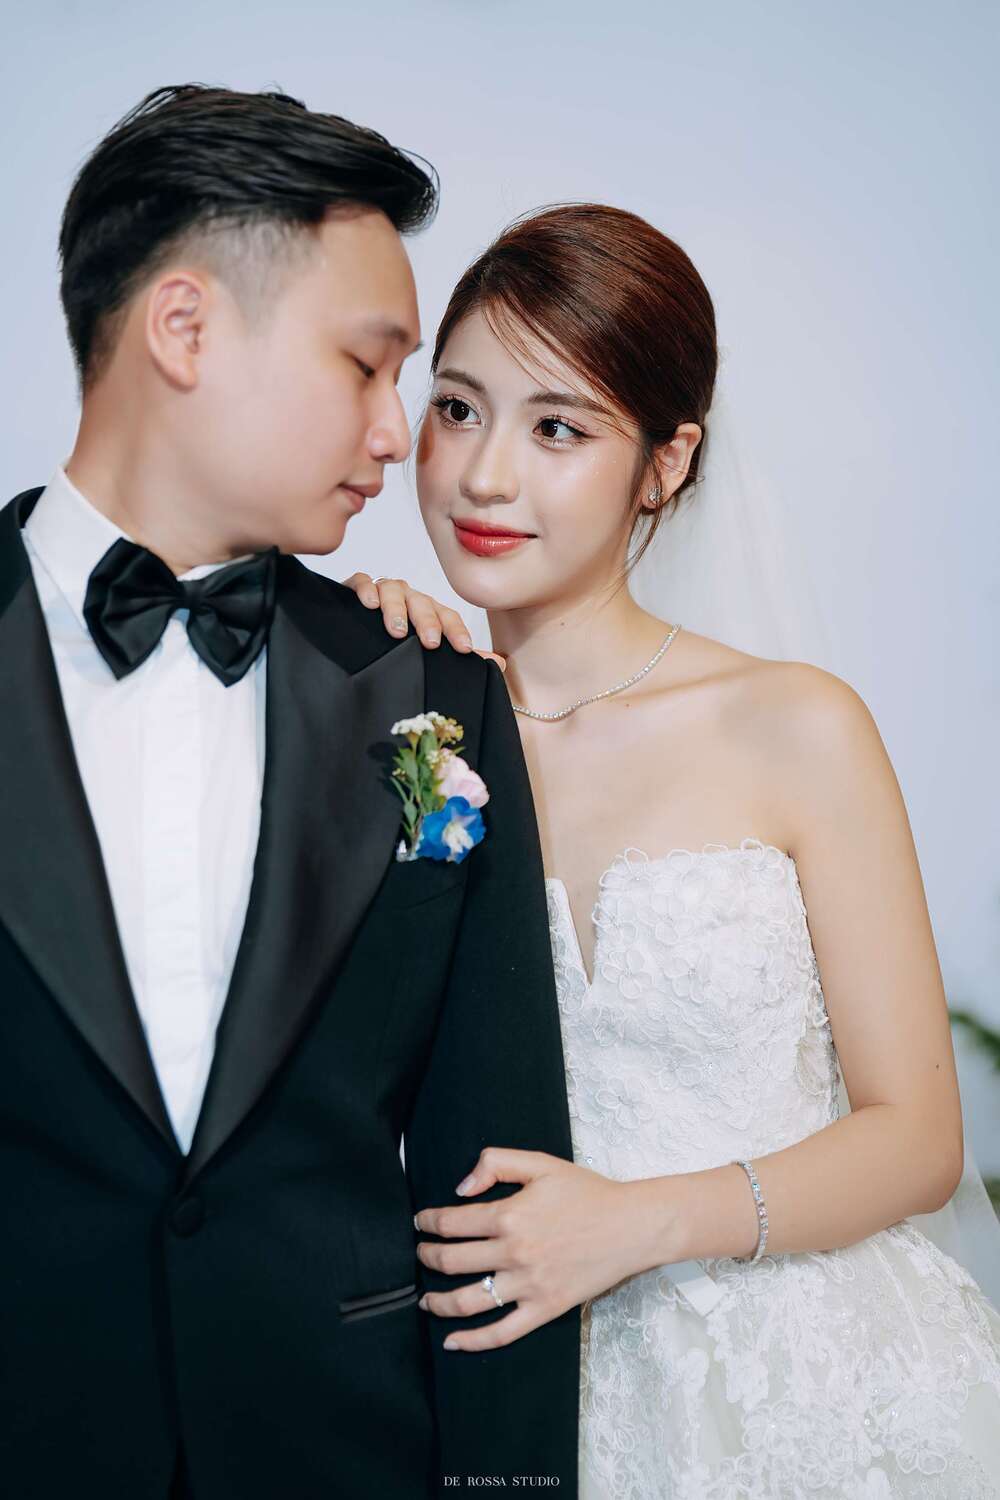 PhiLinh Wedding – Ngọc & Chiến Almaz (8)